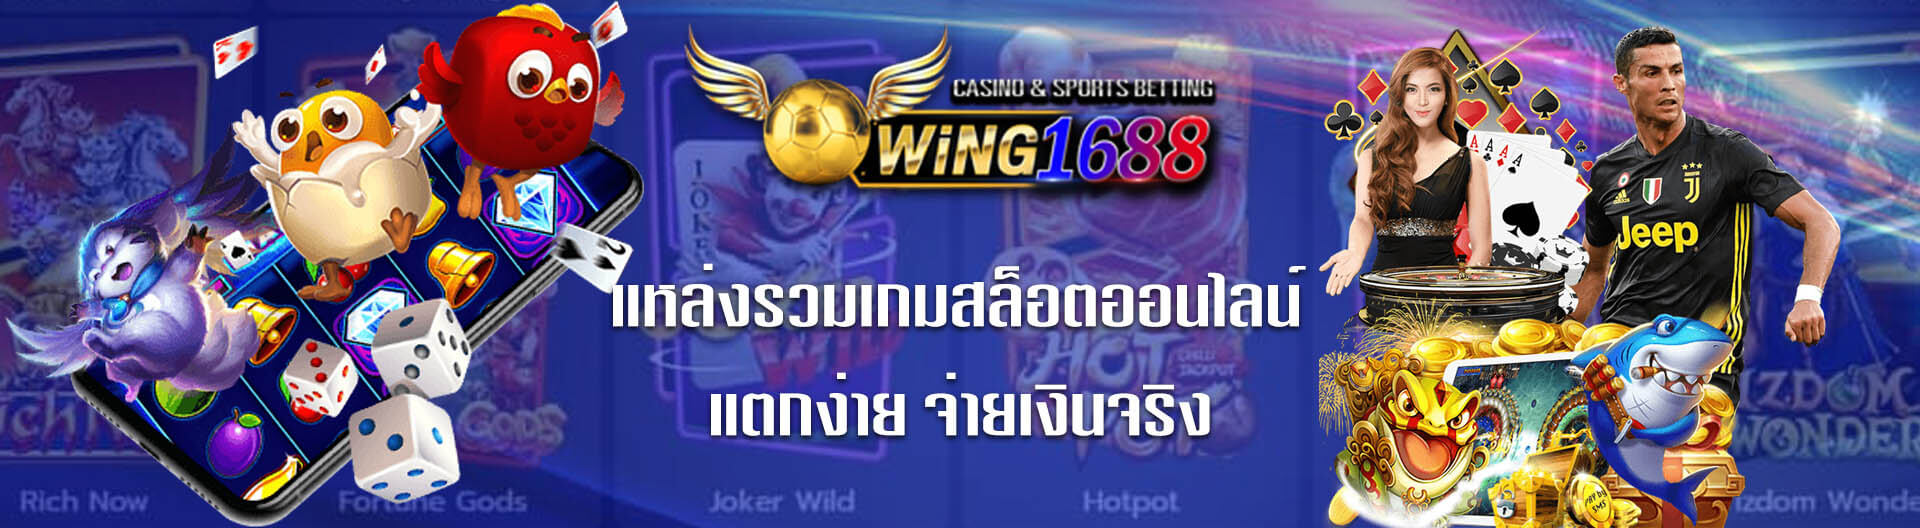 Wing1688